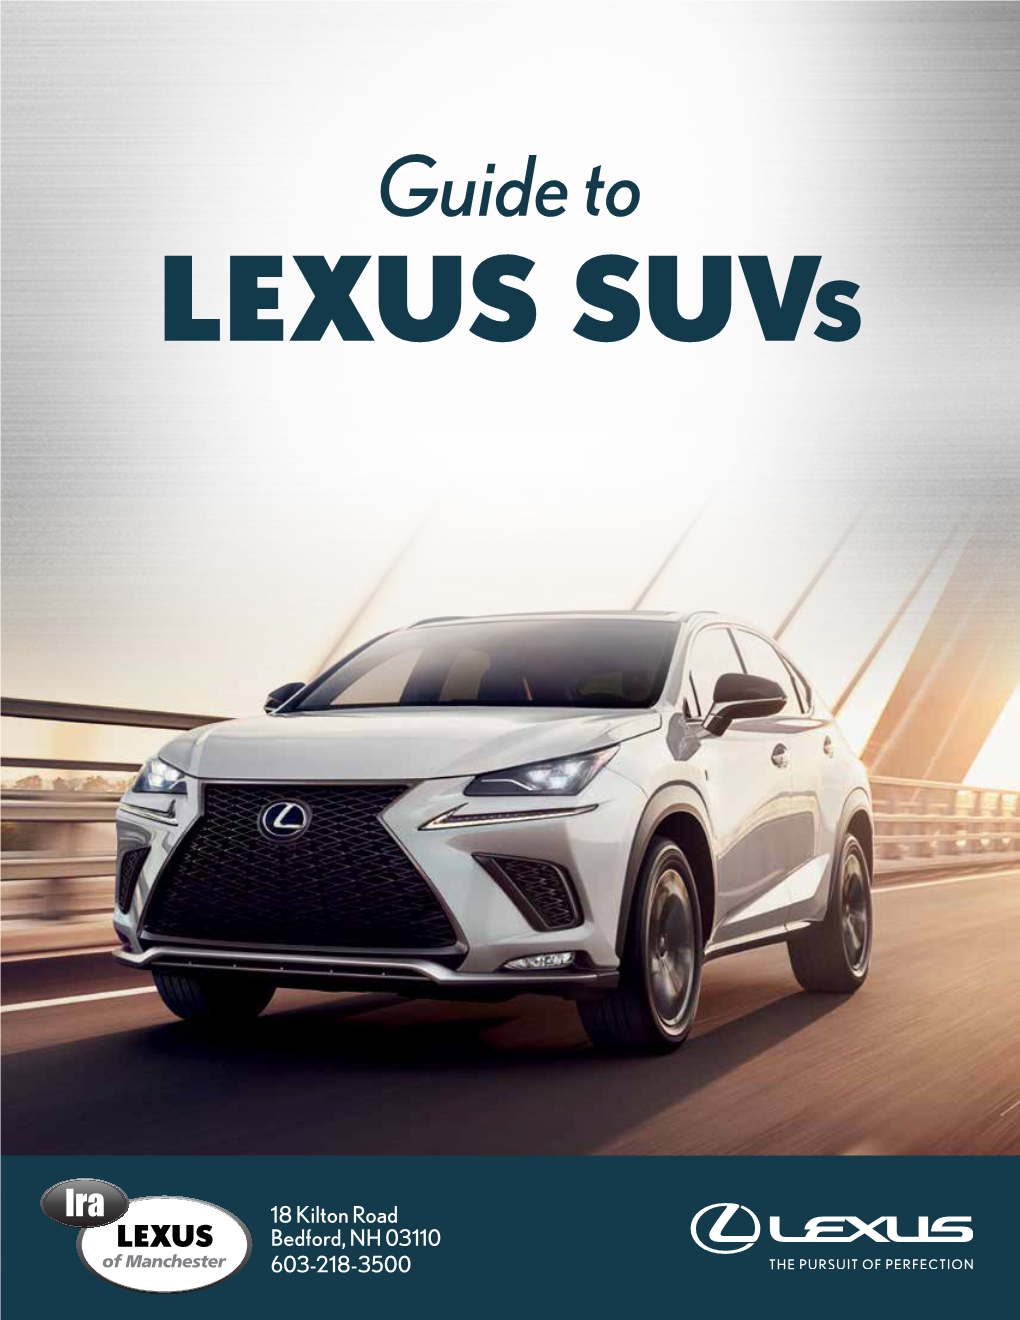 Guide to LEXUS Suvs